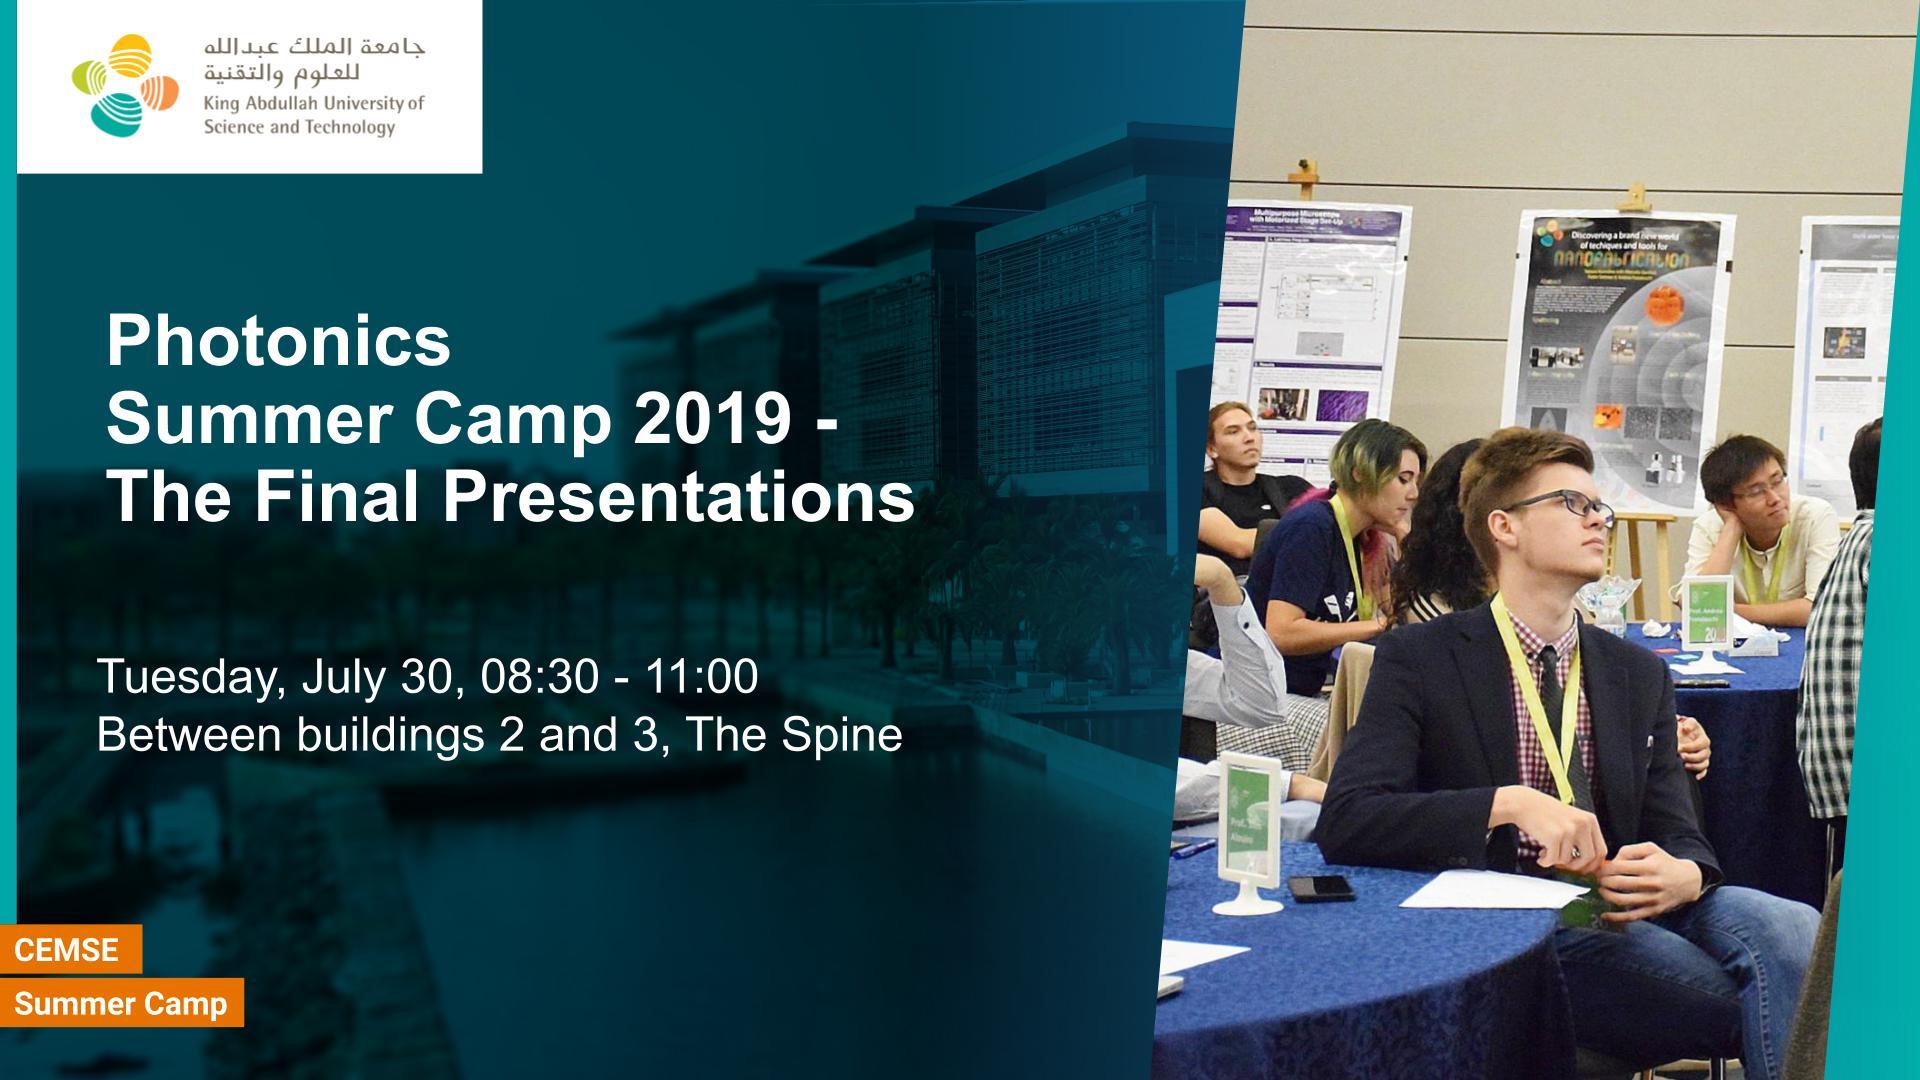 KAUST CEMSE Final Presentations Photonics Summer Camp 2019